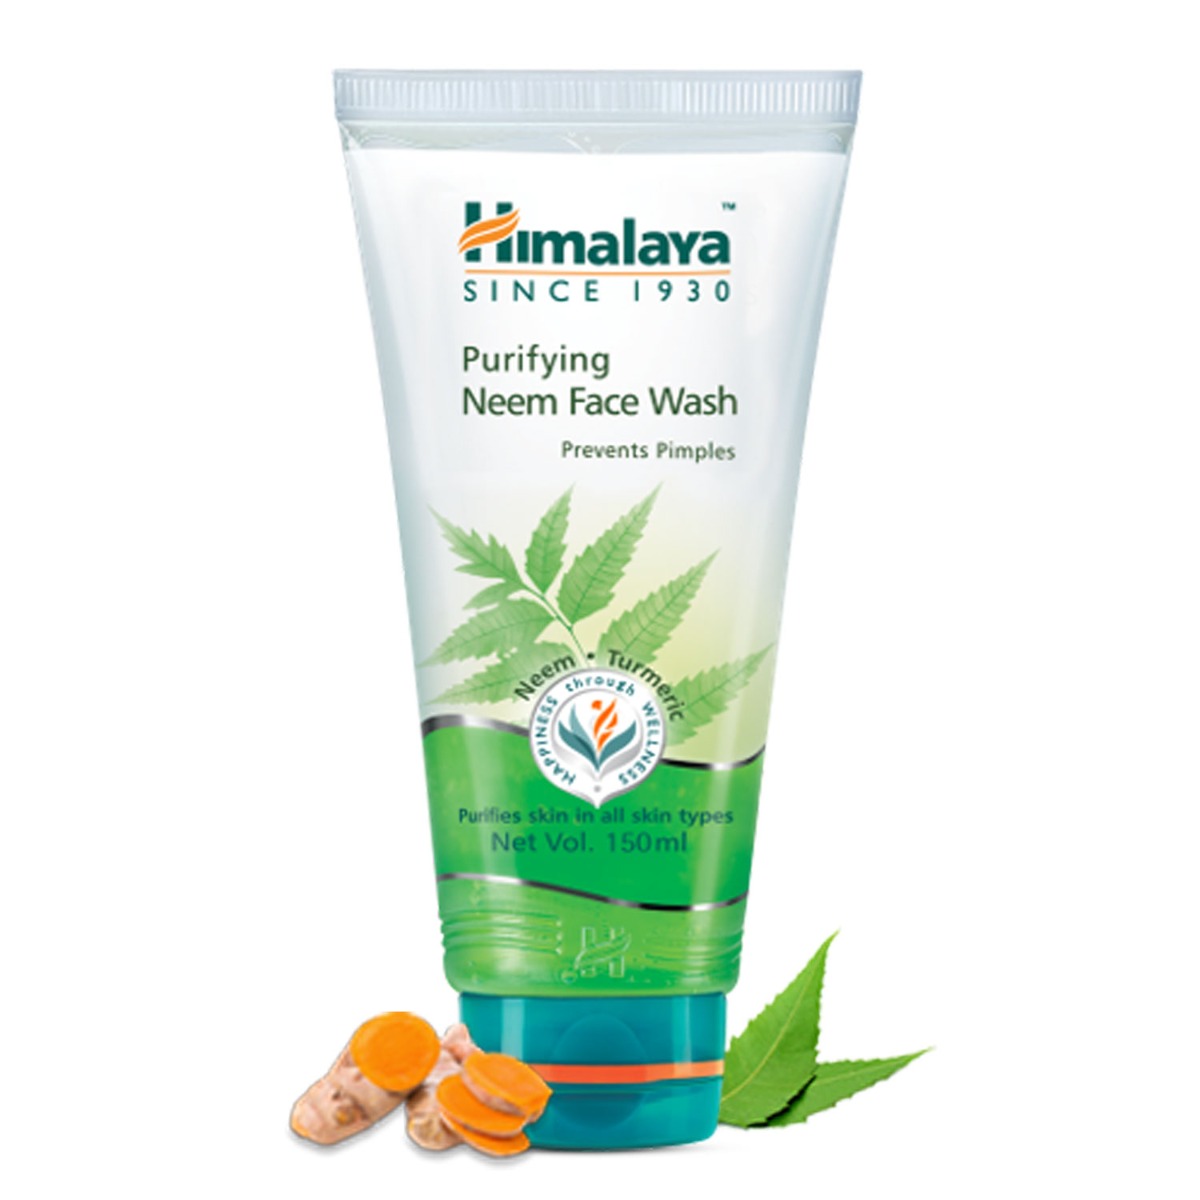 Himalaya Purifying Neem Face Wash, 150ml